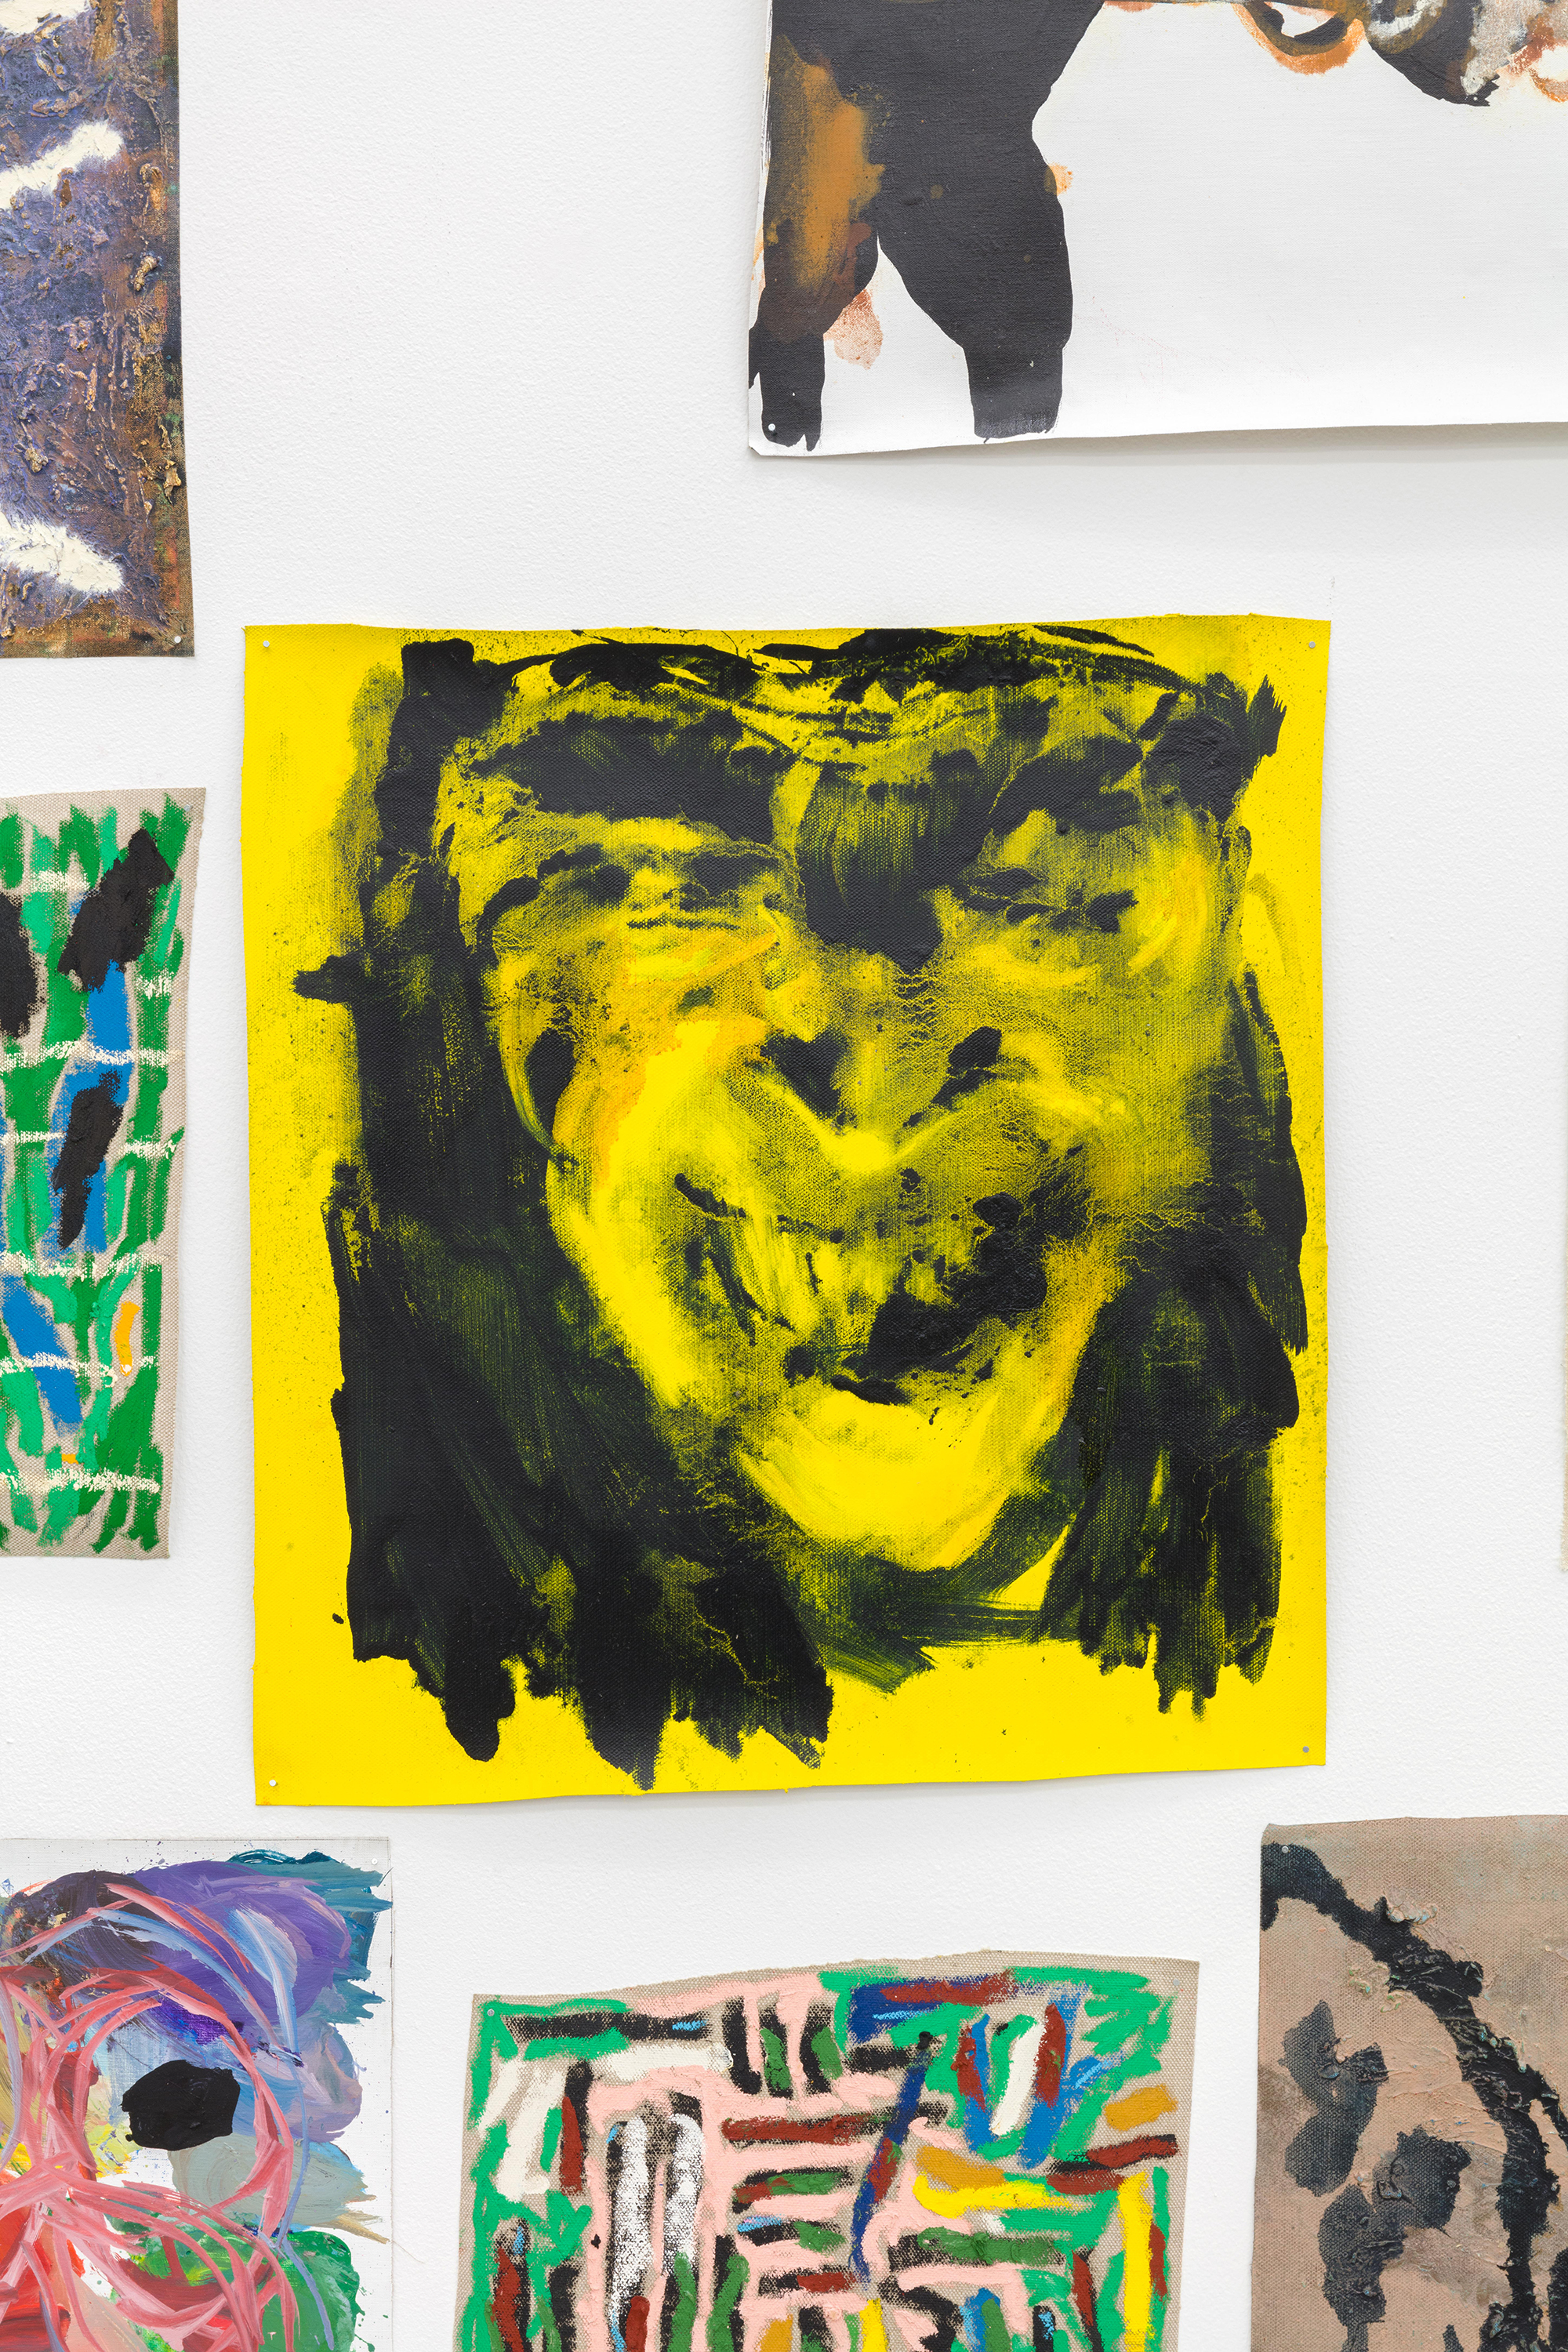  - Self-portrait (yellow), 2020